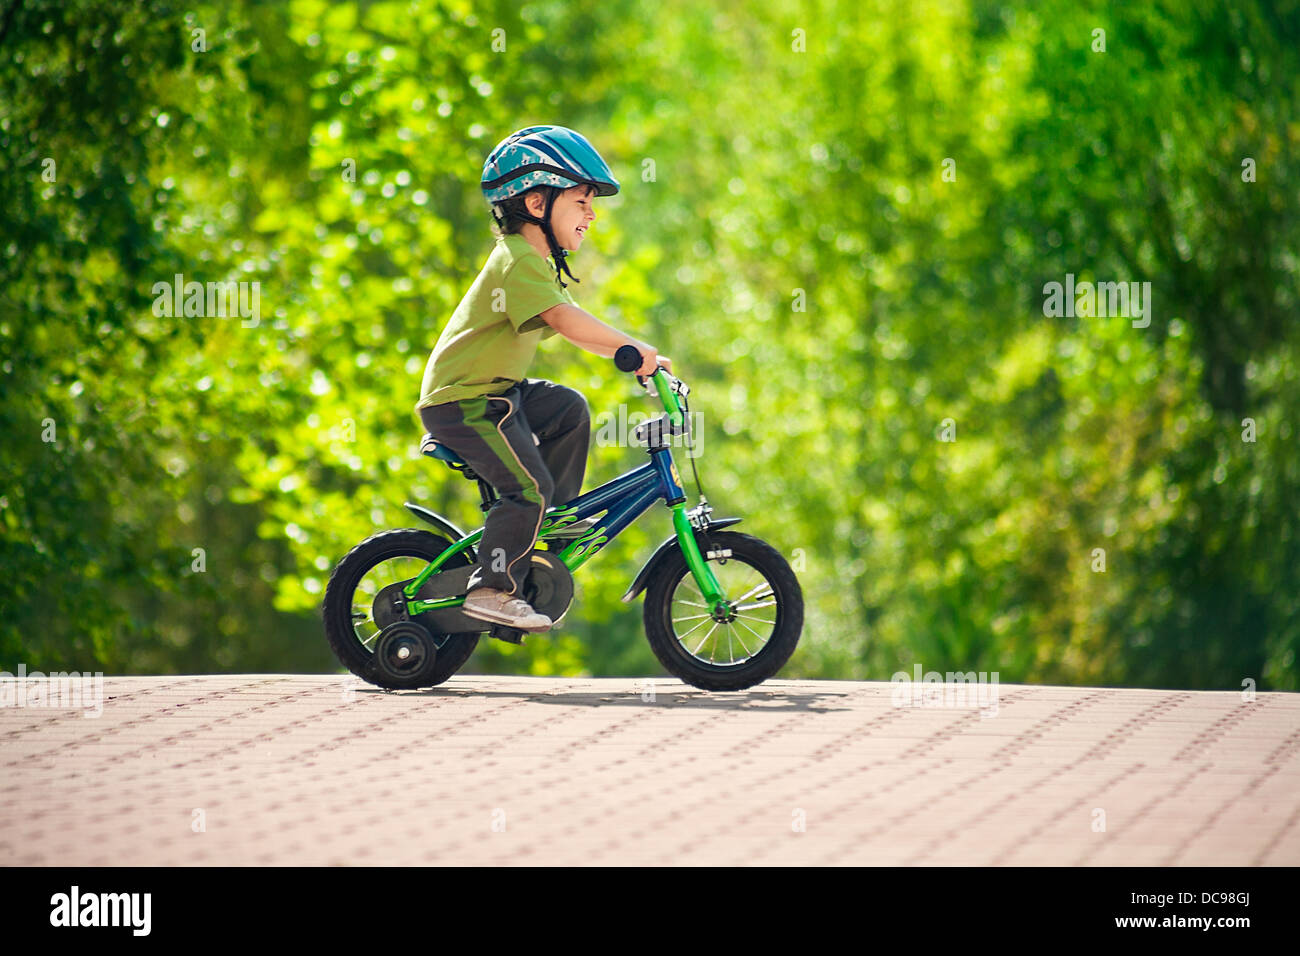 Boy in a helmet riding bike Banque D'Images